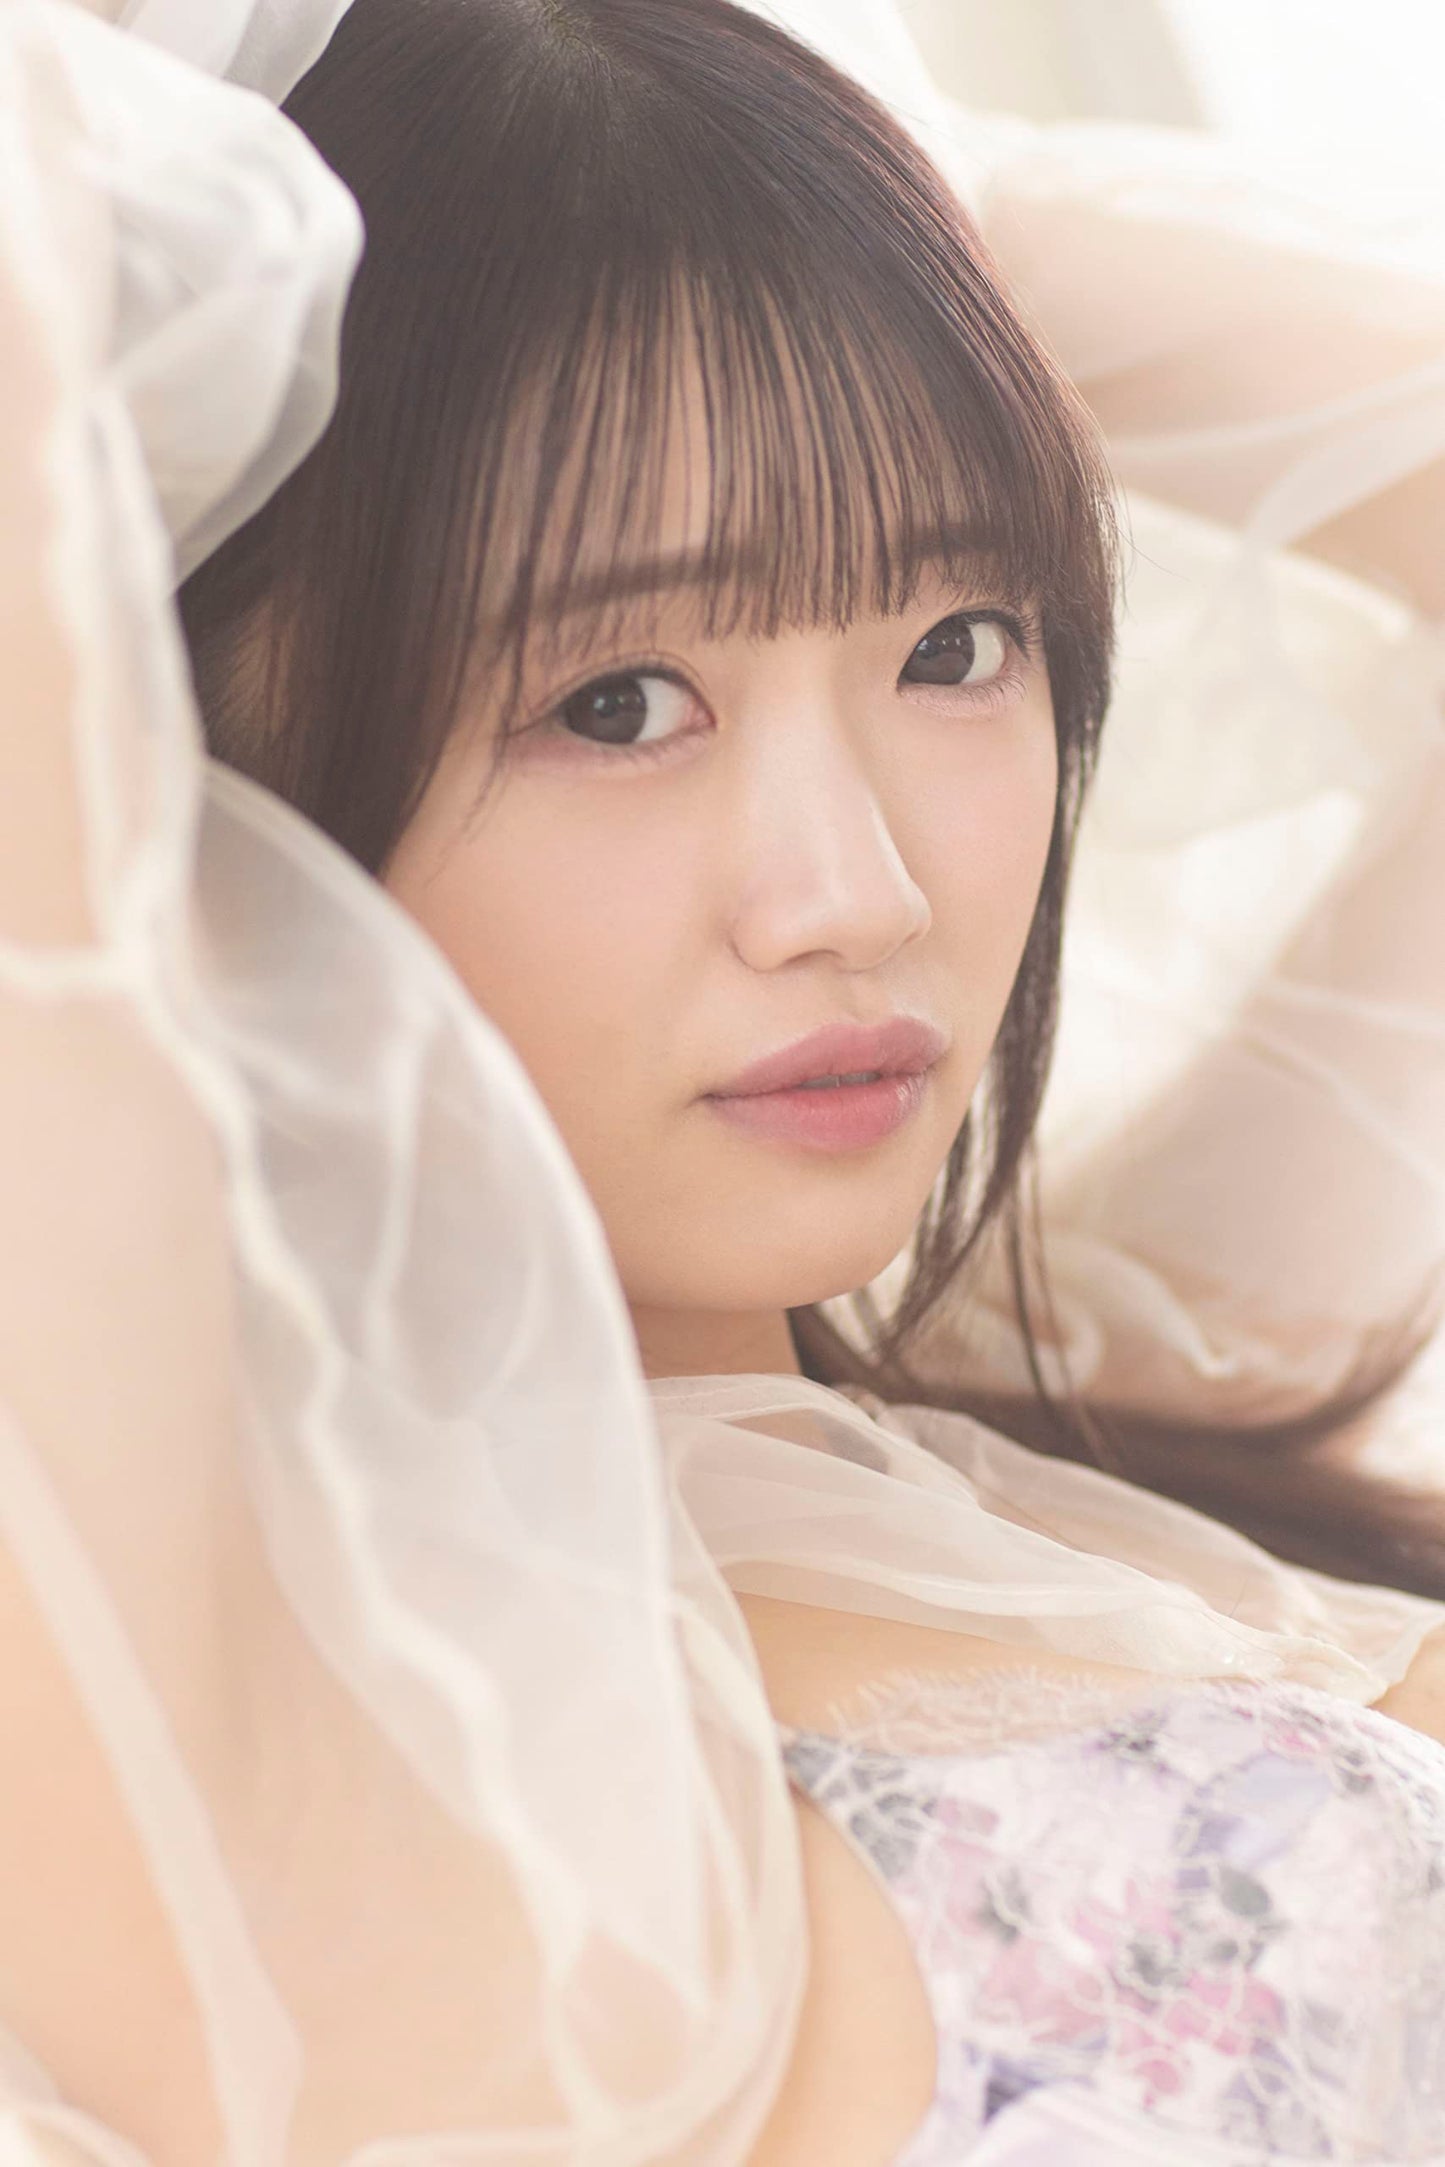 Rika Nakai Photo Book "Sukideshita" / AKB48 NGT48